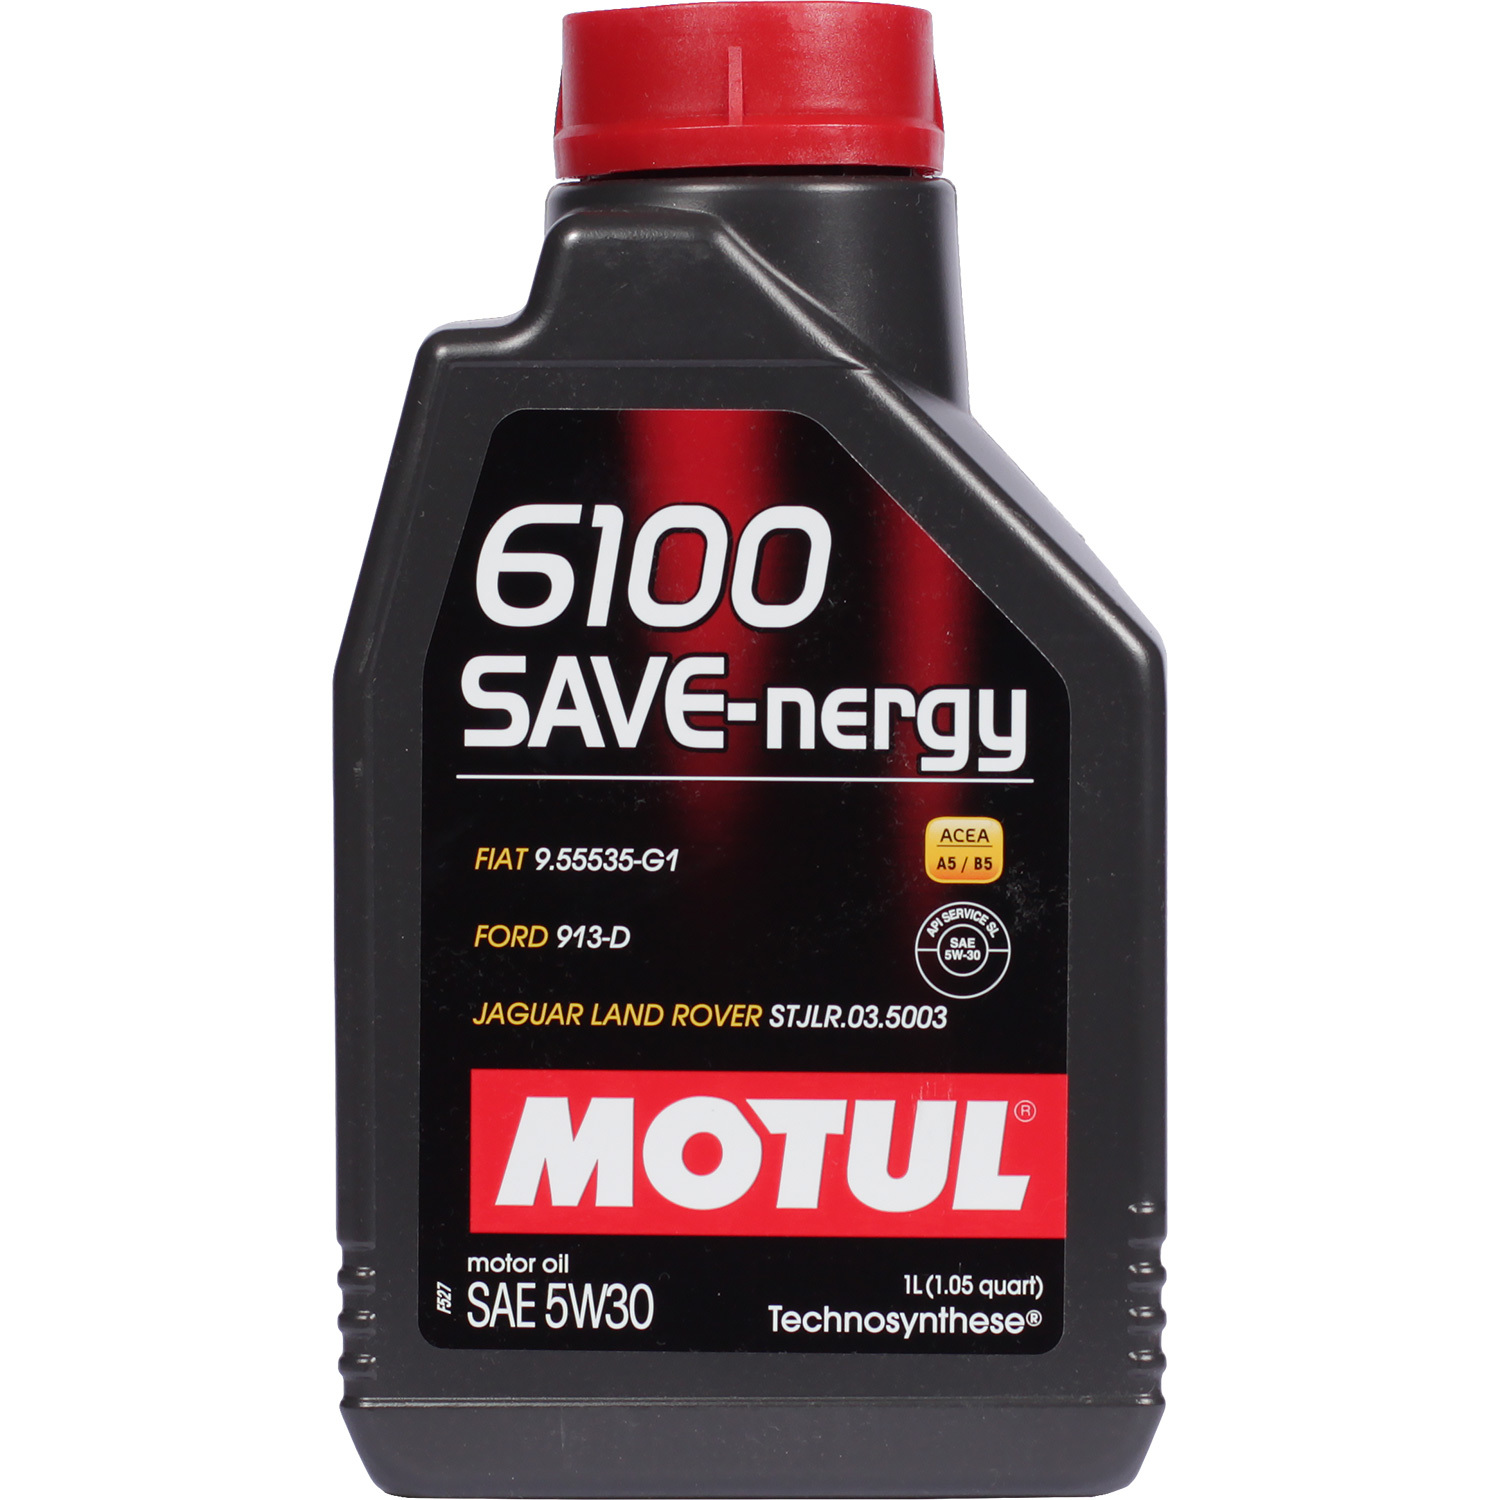 Motul Моторное масло Motul 6100 SAVE-NERGY 5W-30, 1 л motul моторное масло motul 6100 save nergy 5w 30 4 л